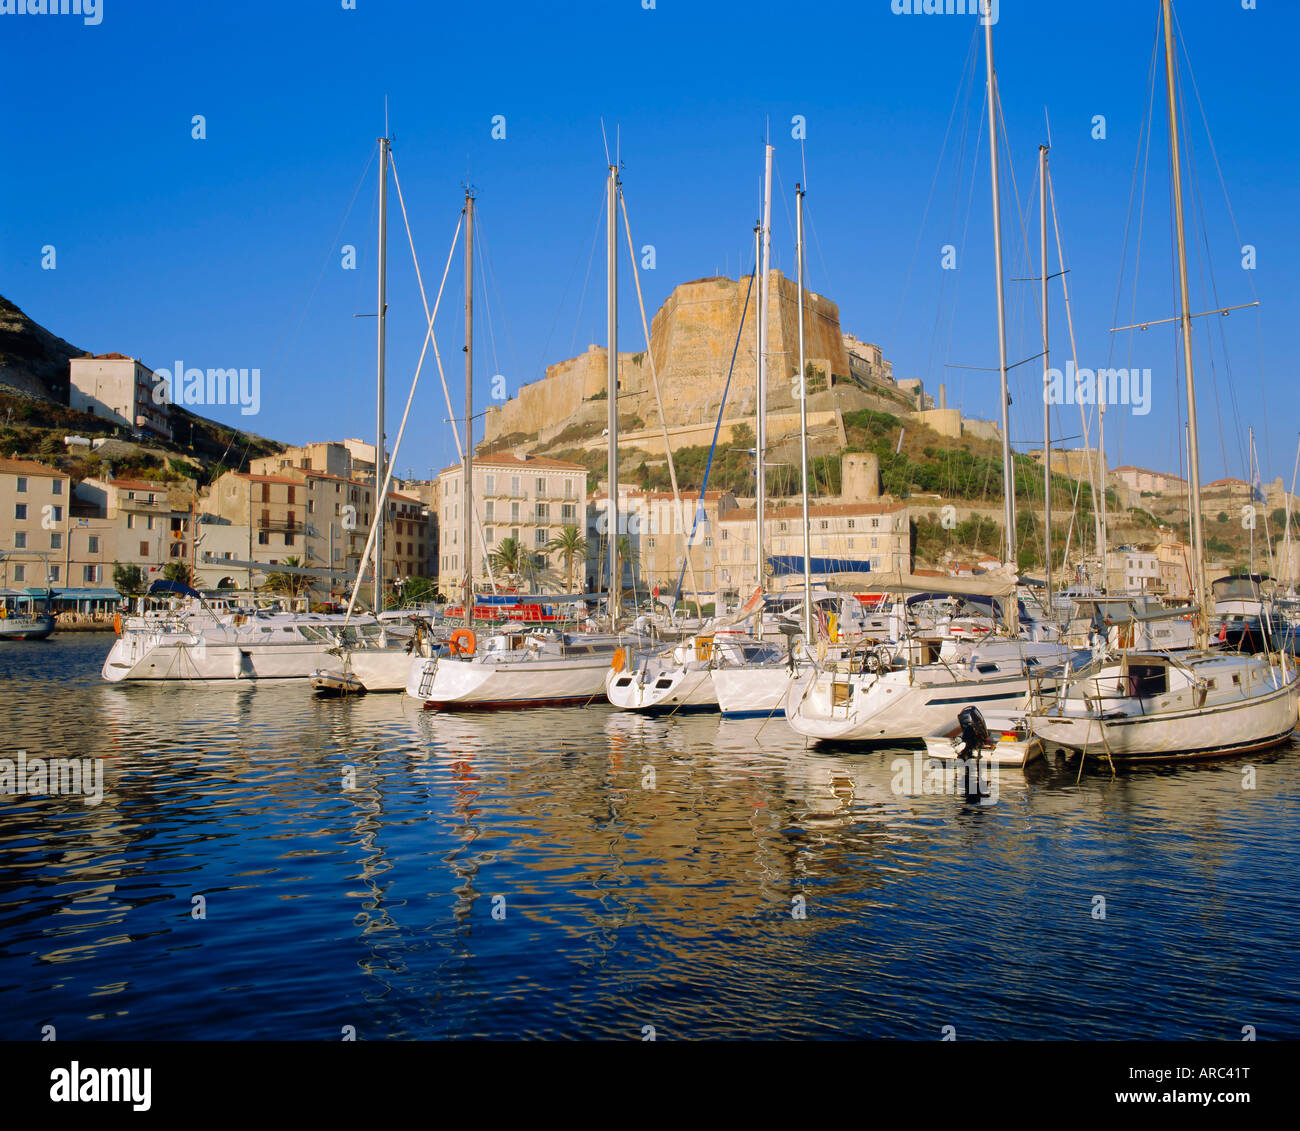 Le port de Bonifacio, Corse, France Banque D'Images